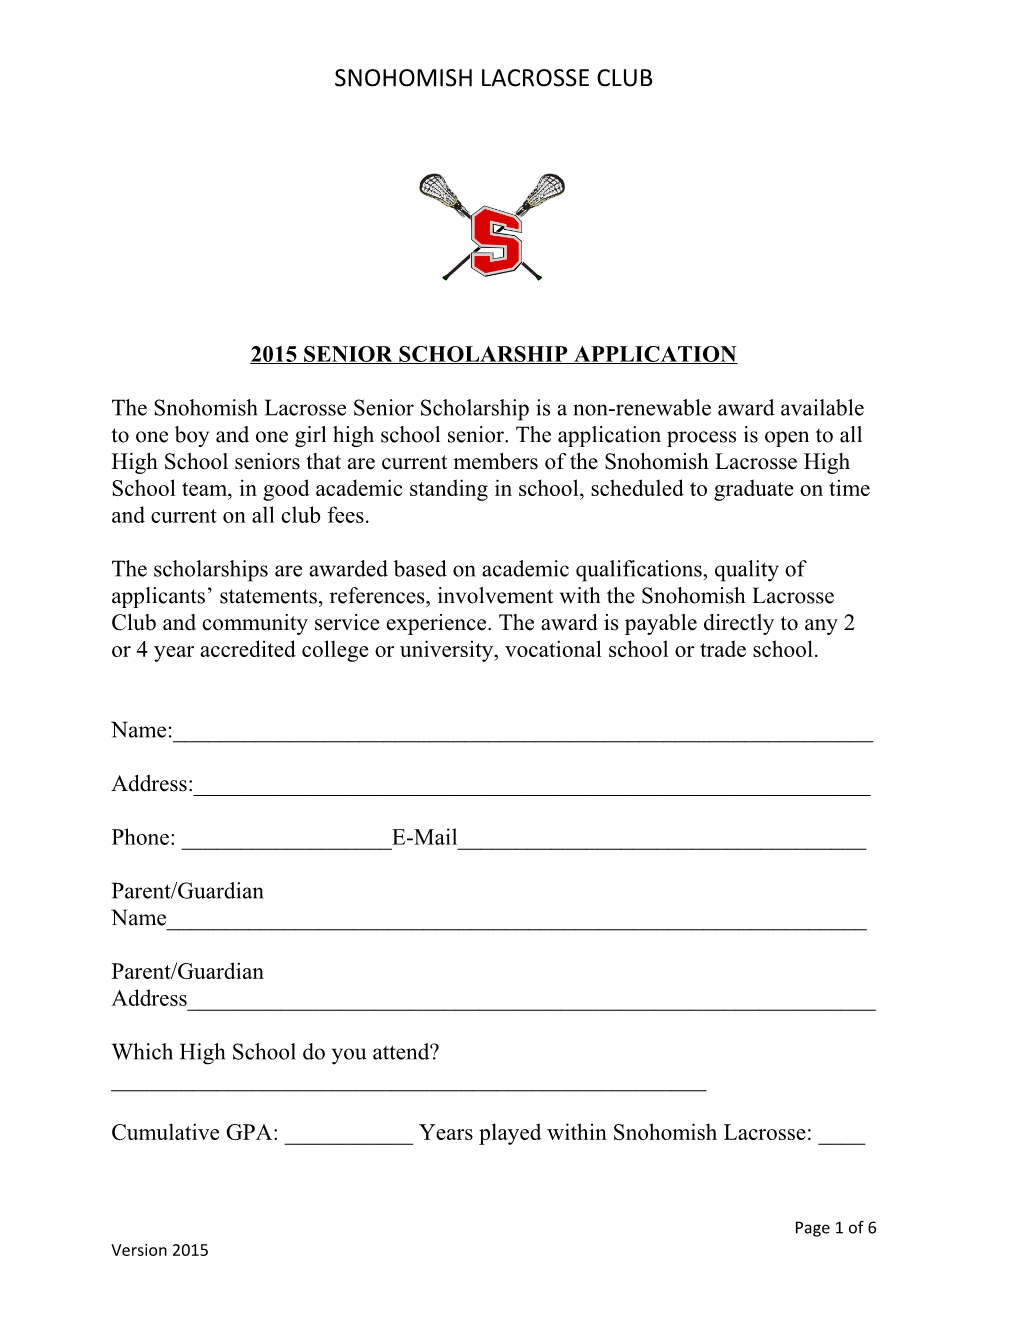 2015 Senior Scholarship Application